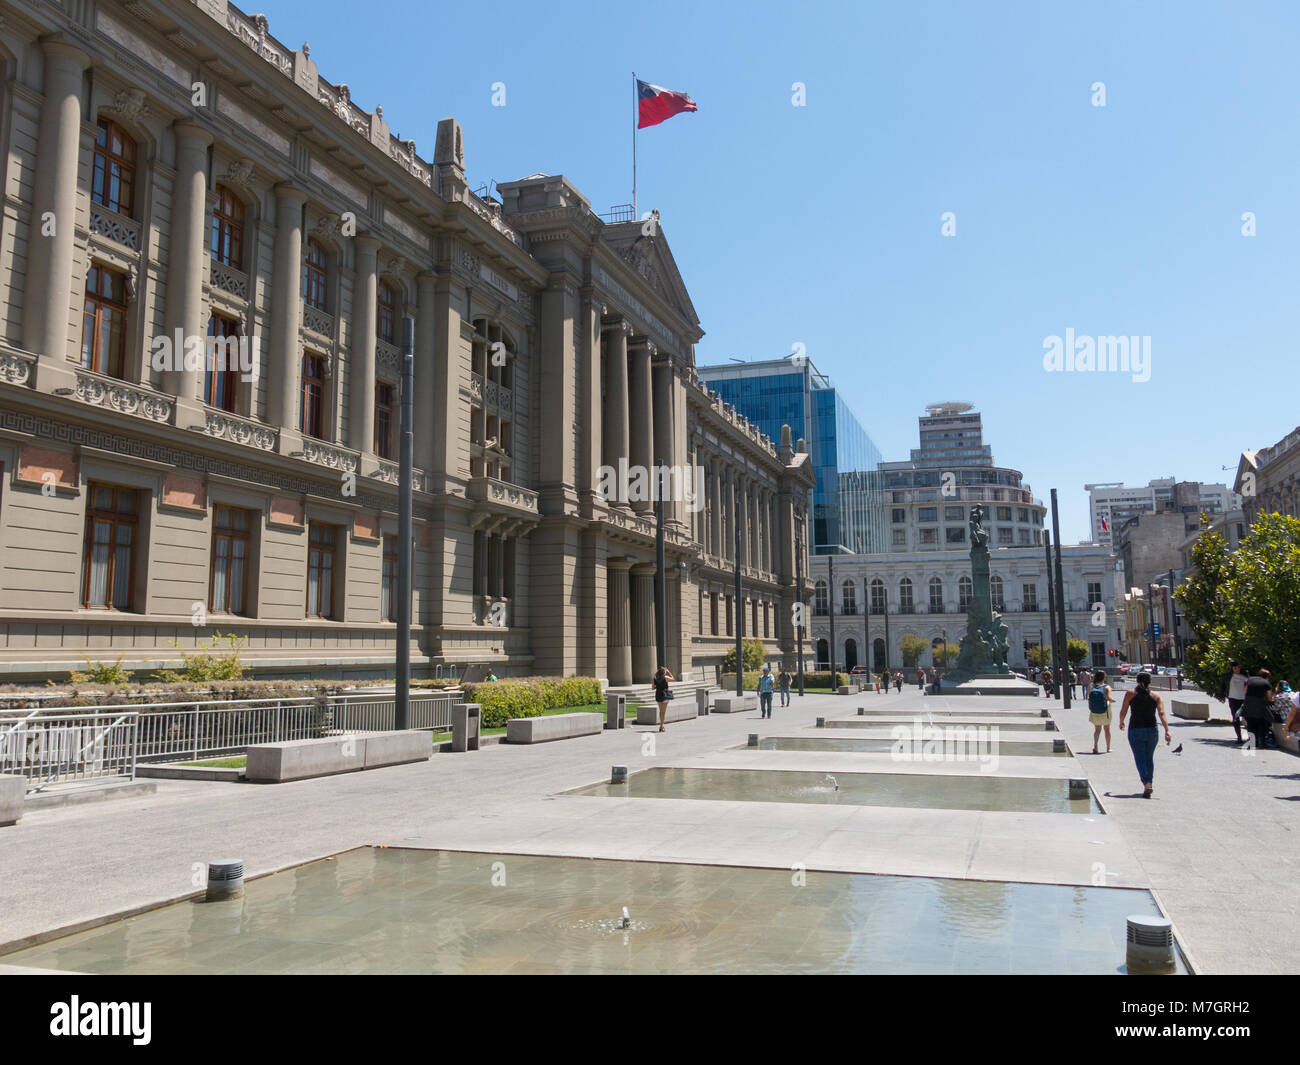 SANTIAGO DE CHILE, CHILE - Januar 26, 2018: Blick auf den Palast der Gerichtshöfe der Santiago de Chile, der Hauptstadt Chiles, in Montt-Vara entfernt Stockfoto